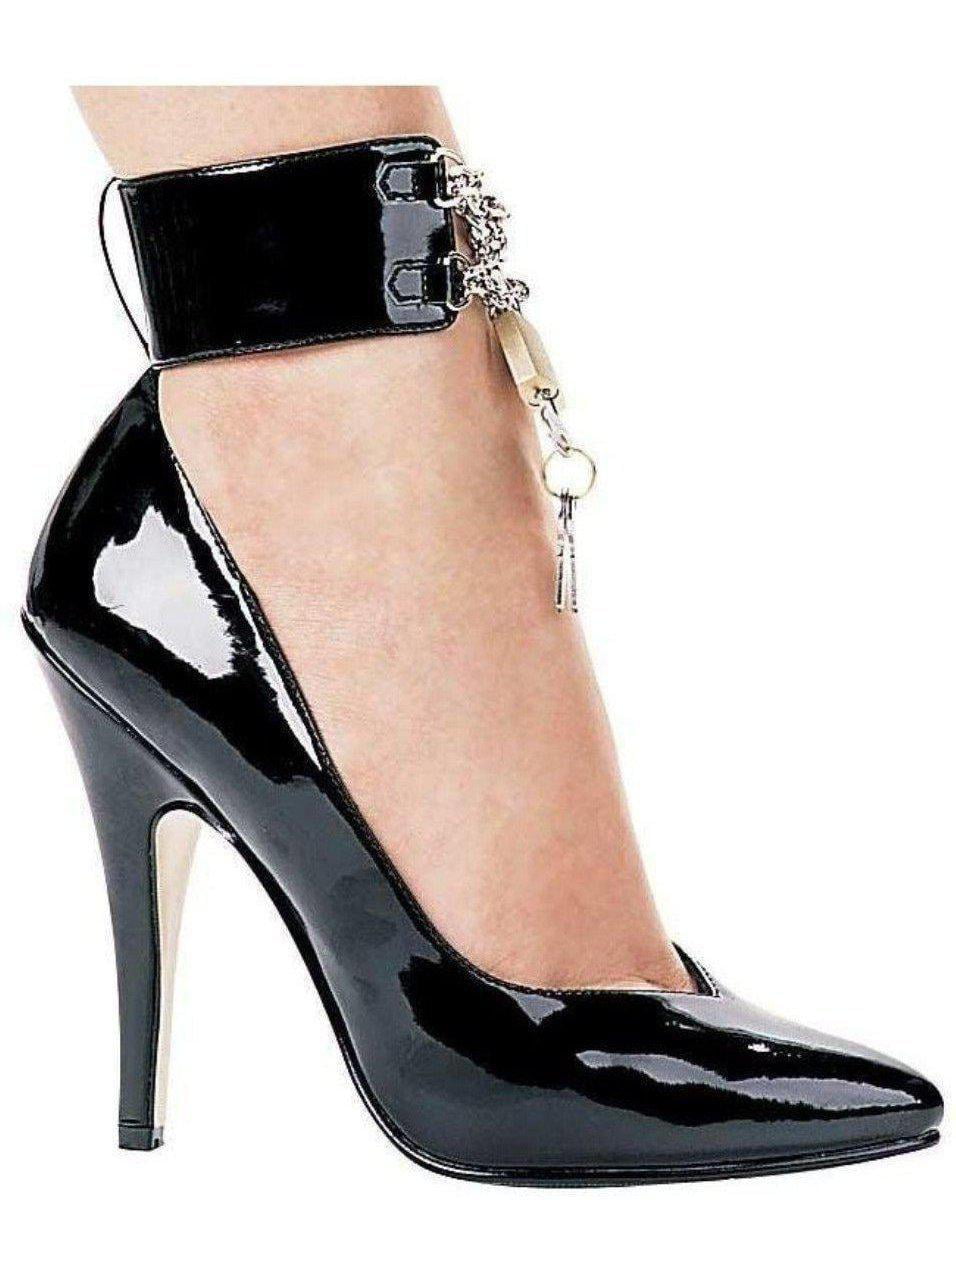 Ellie Shoes Womens 6.5 inch Stiletto Heel Pumps Silver Spikes Black;11